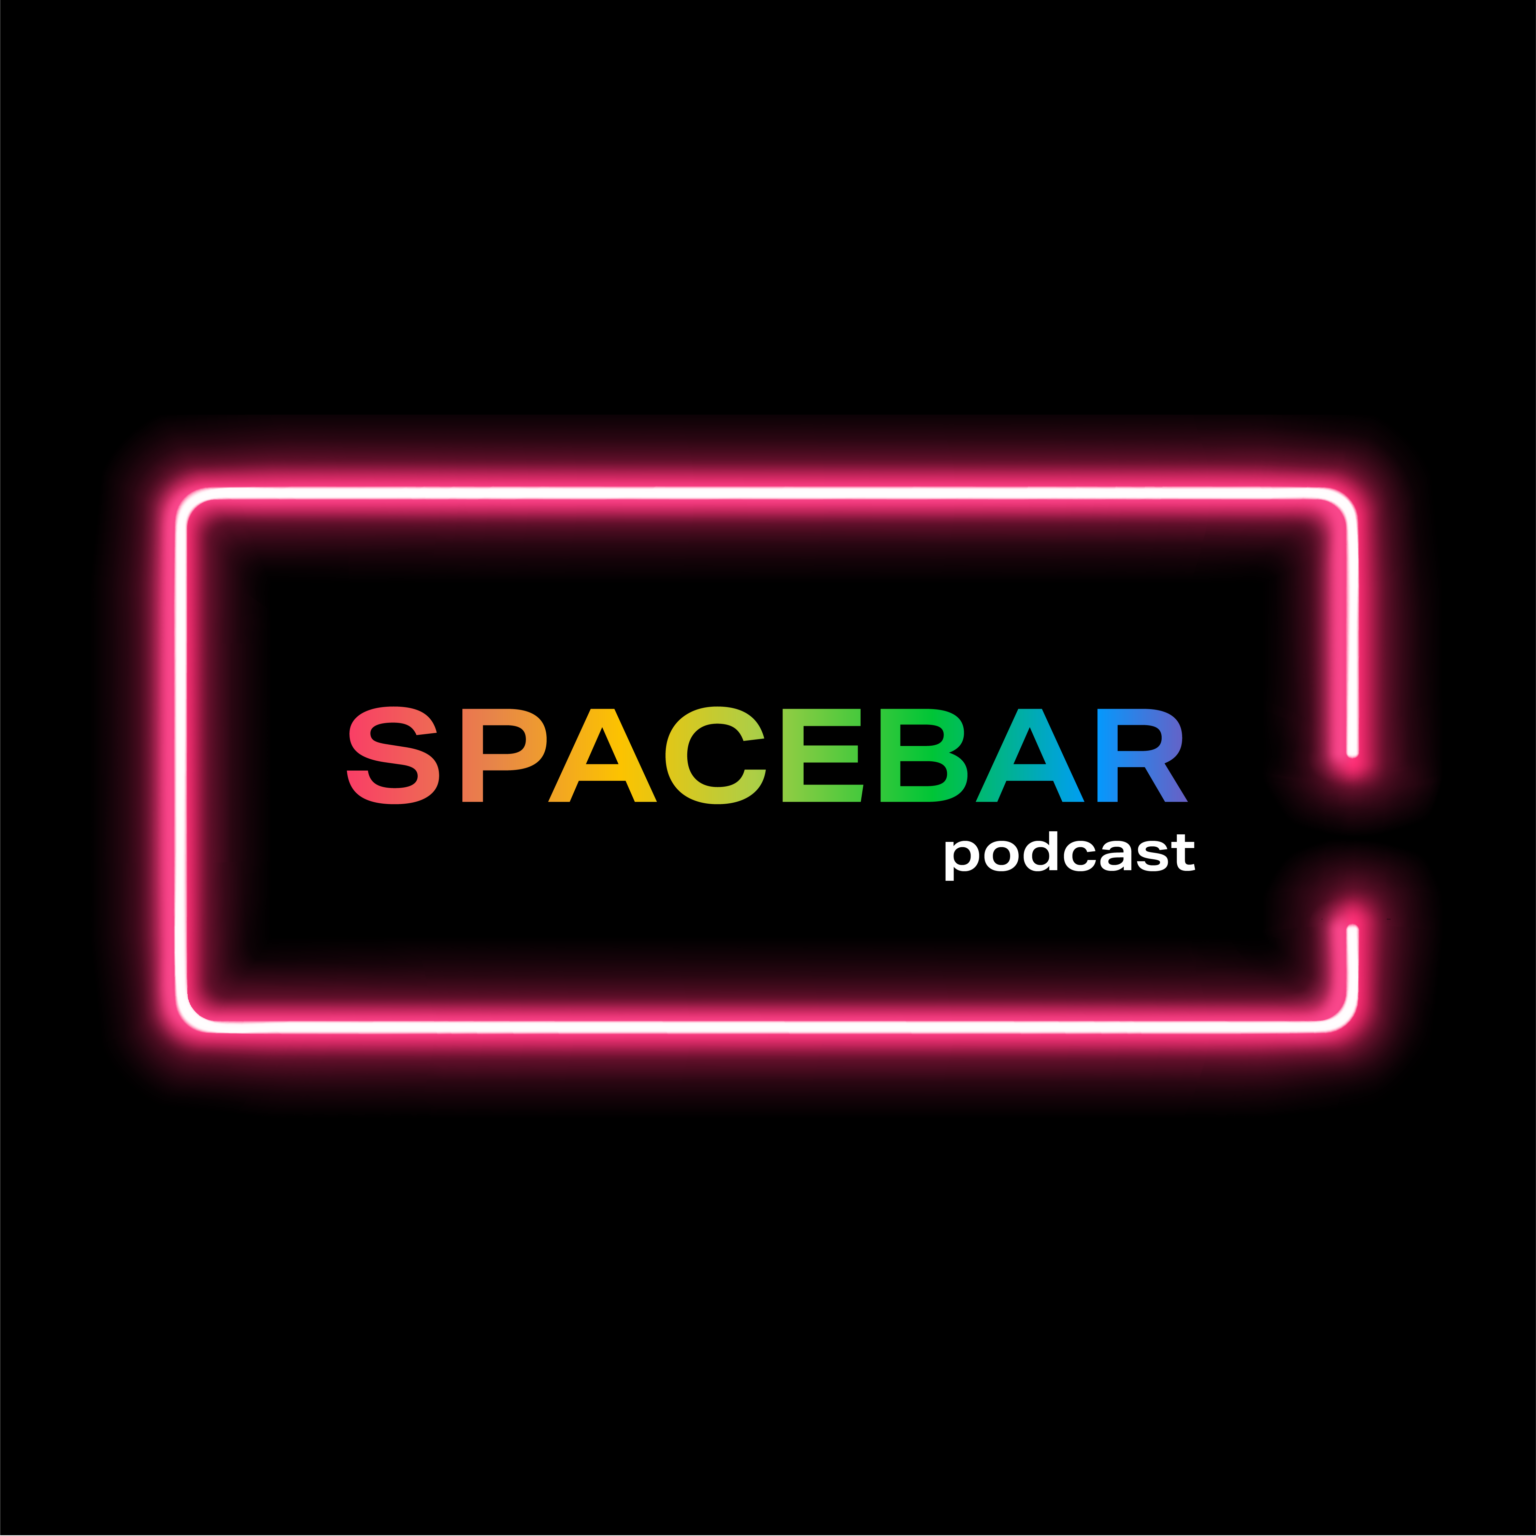 SpaceBar podcast logo